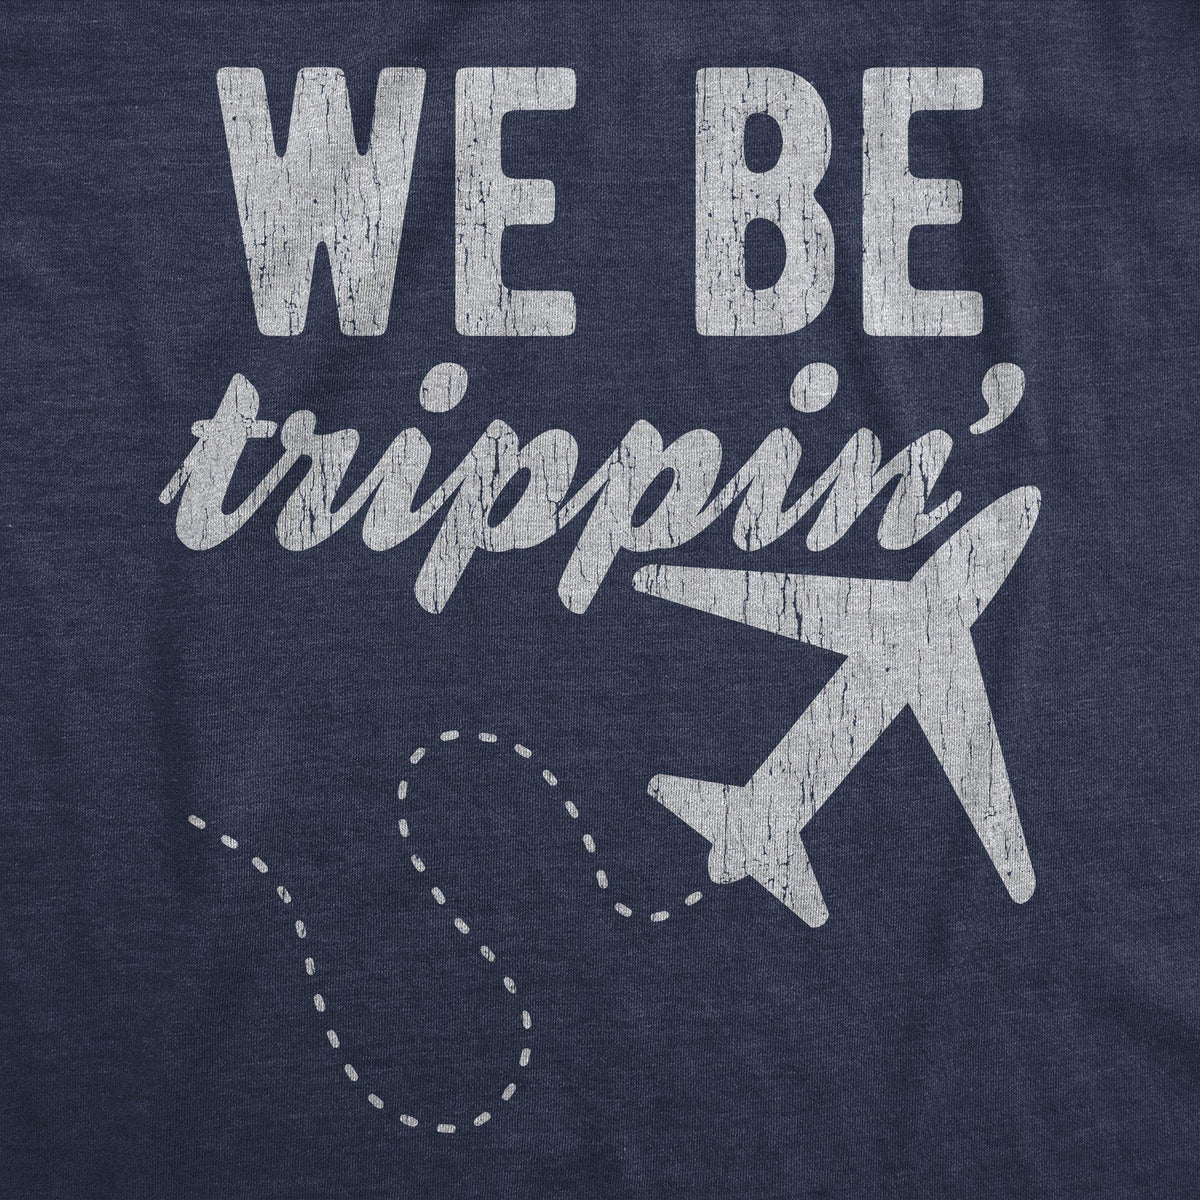 We Be Trippin&#39; Women&#39;s Tshirt - Crazy Dog T-Shirts